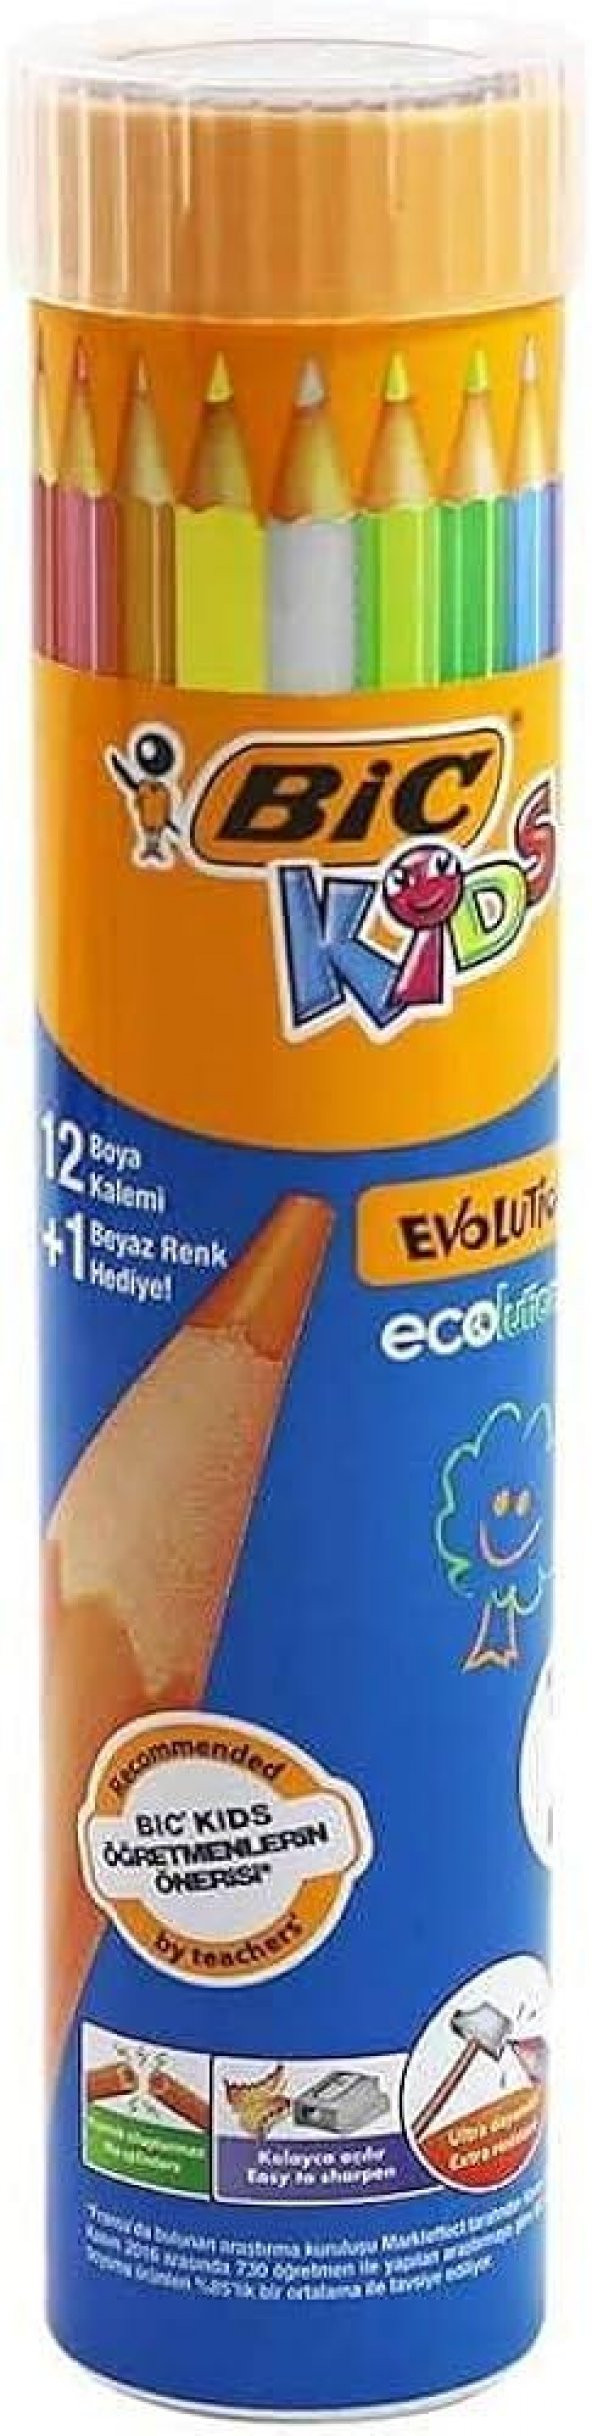 Bic Kids Evolution Kuru Boya Kalemi 12+1 Renk Metal Tüp